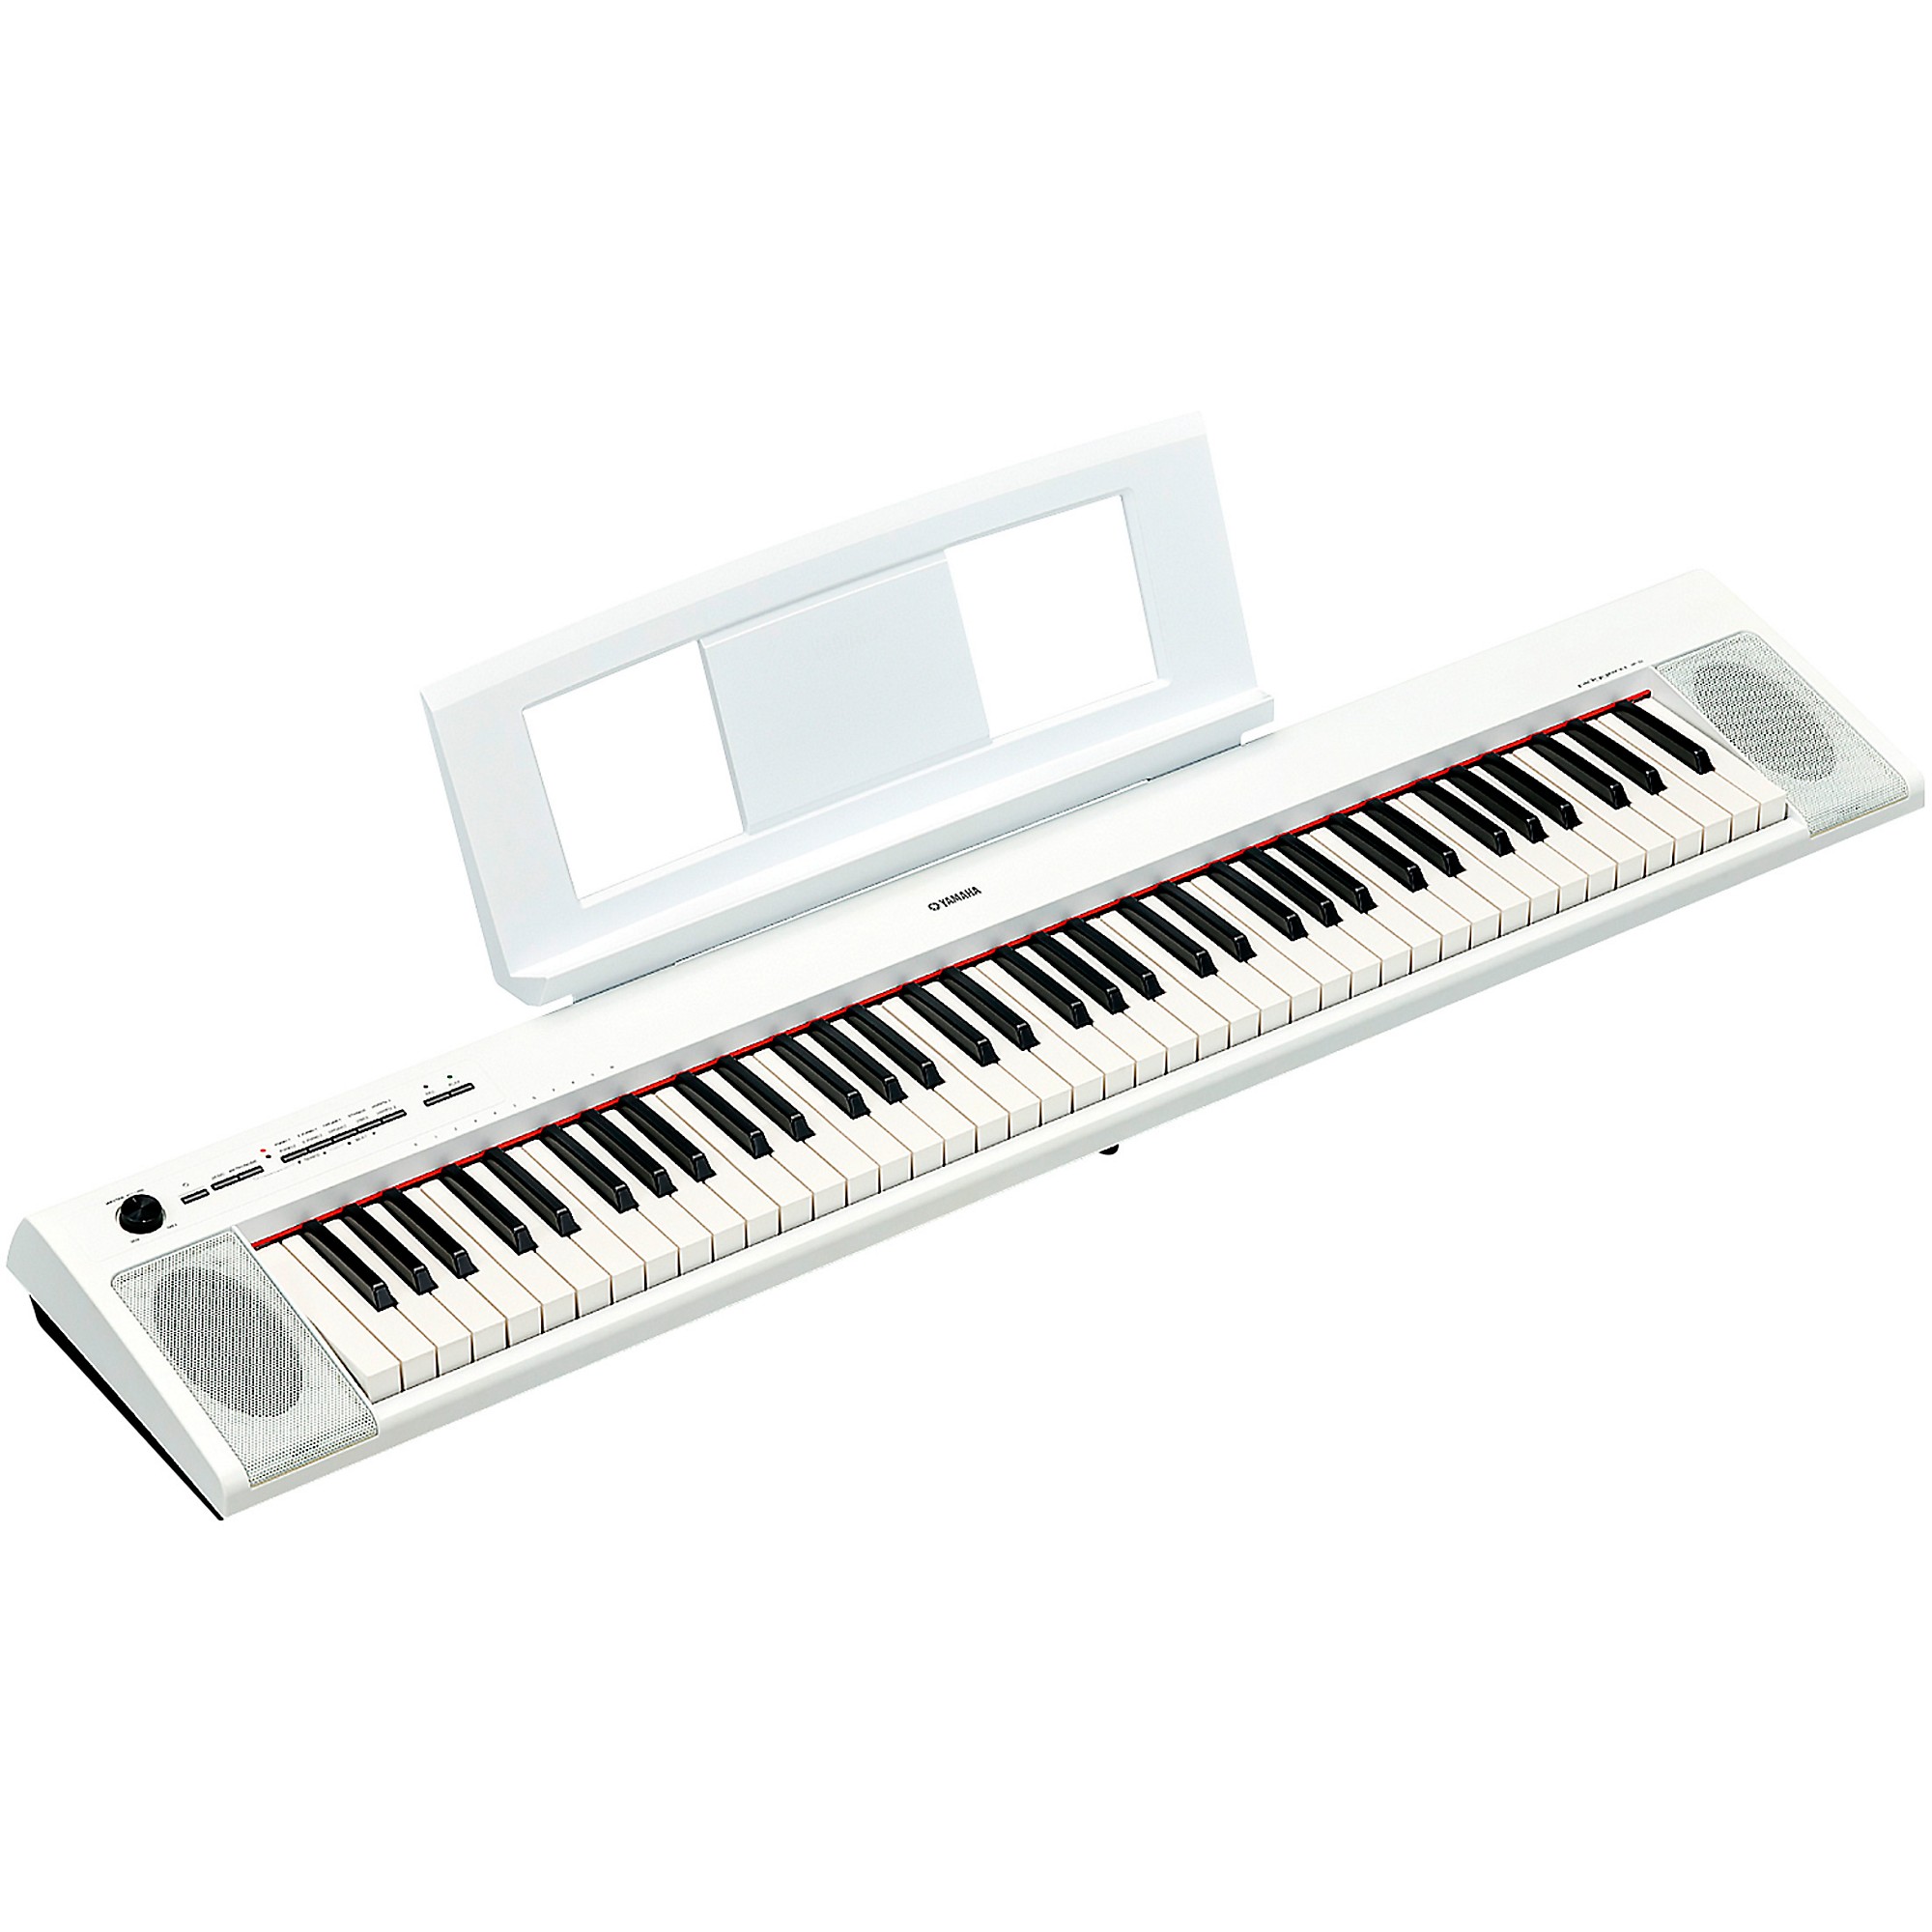 Yamaha Piaggero NP-32 76-Key Portable Keyboard With Power Adapter 